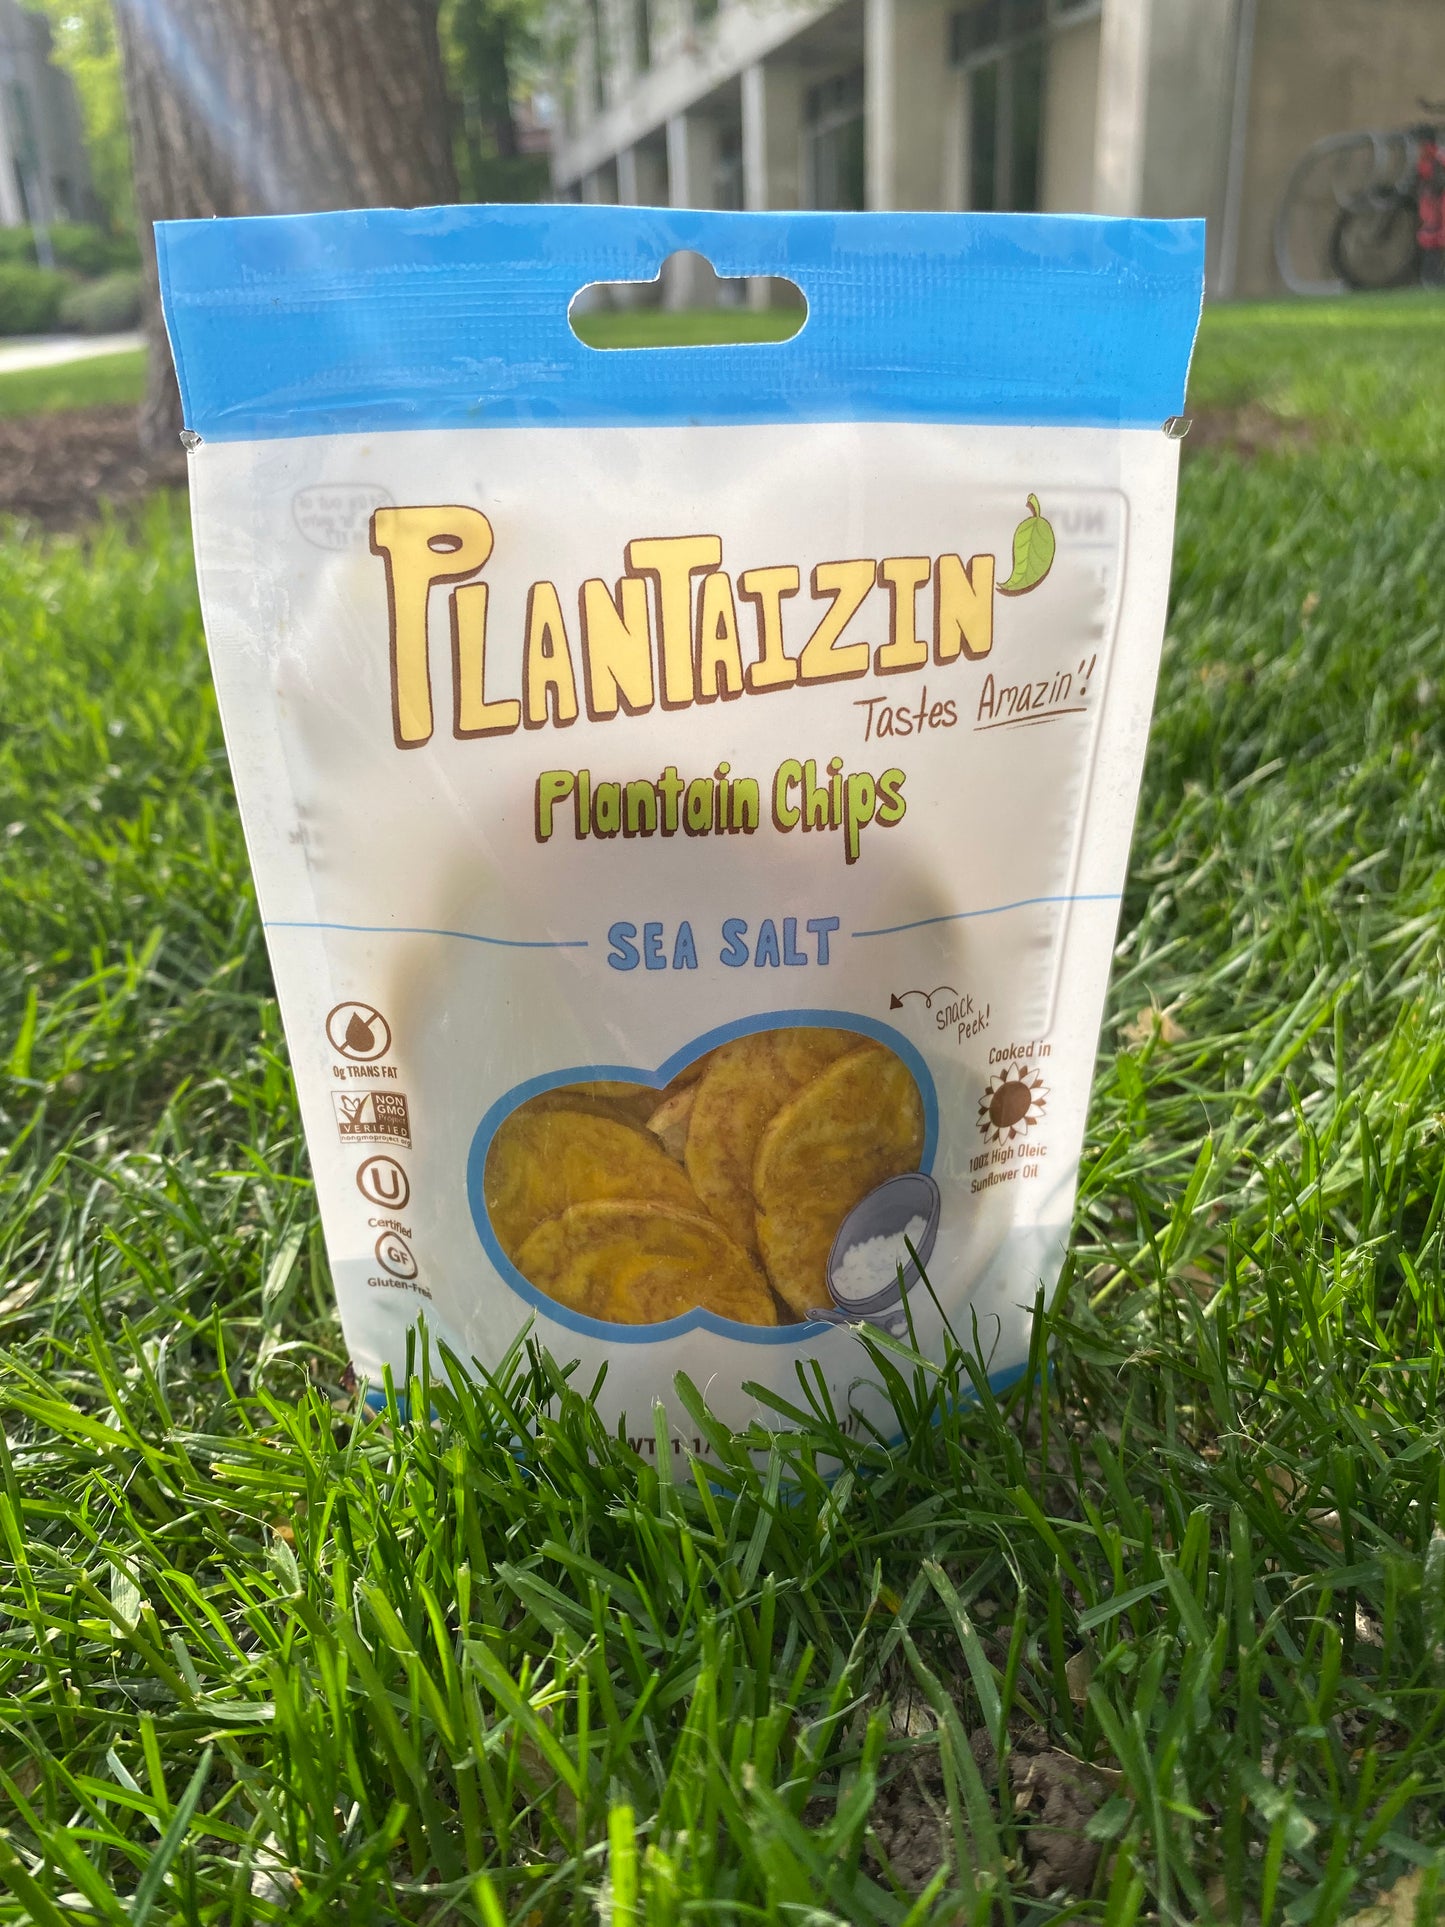 Plantaizin' Plantain Chips - Sea Salt, 1.25oz, 1 case (36 pack), B2B